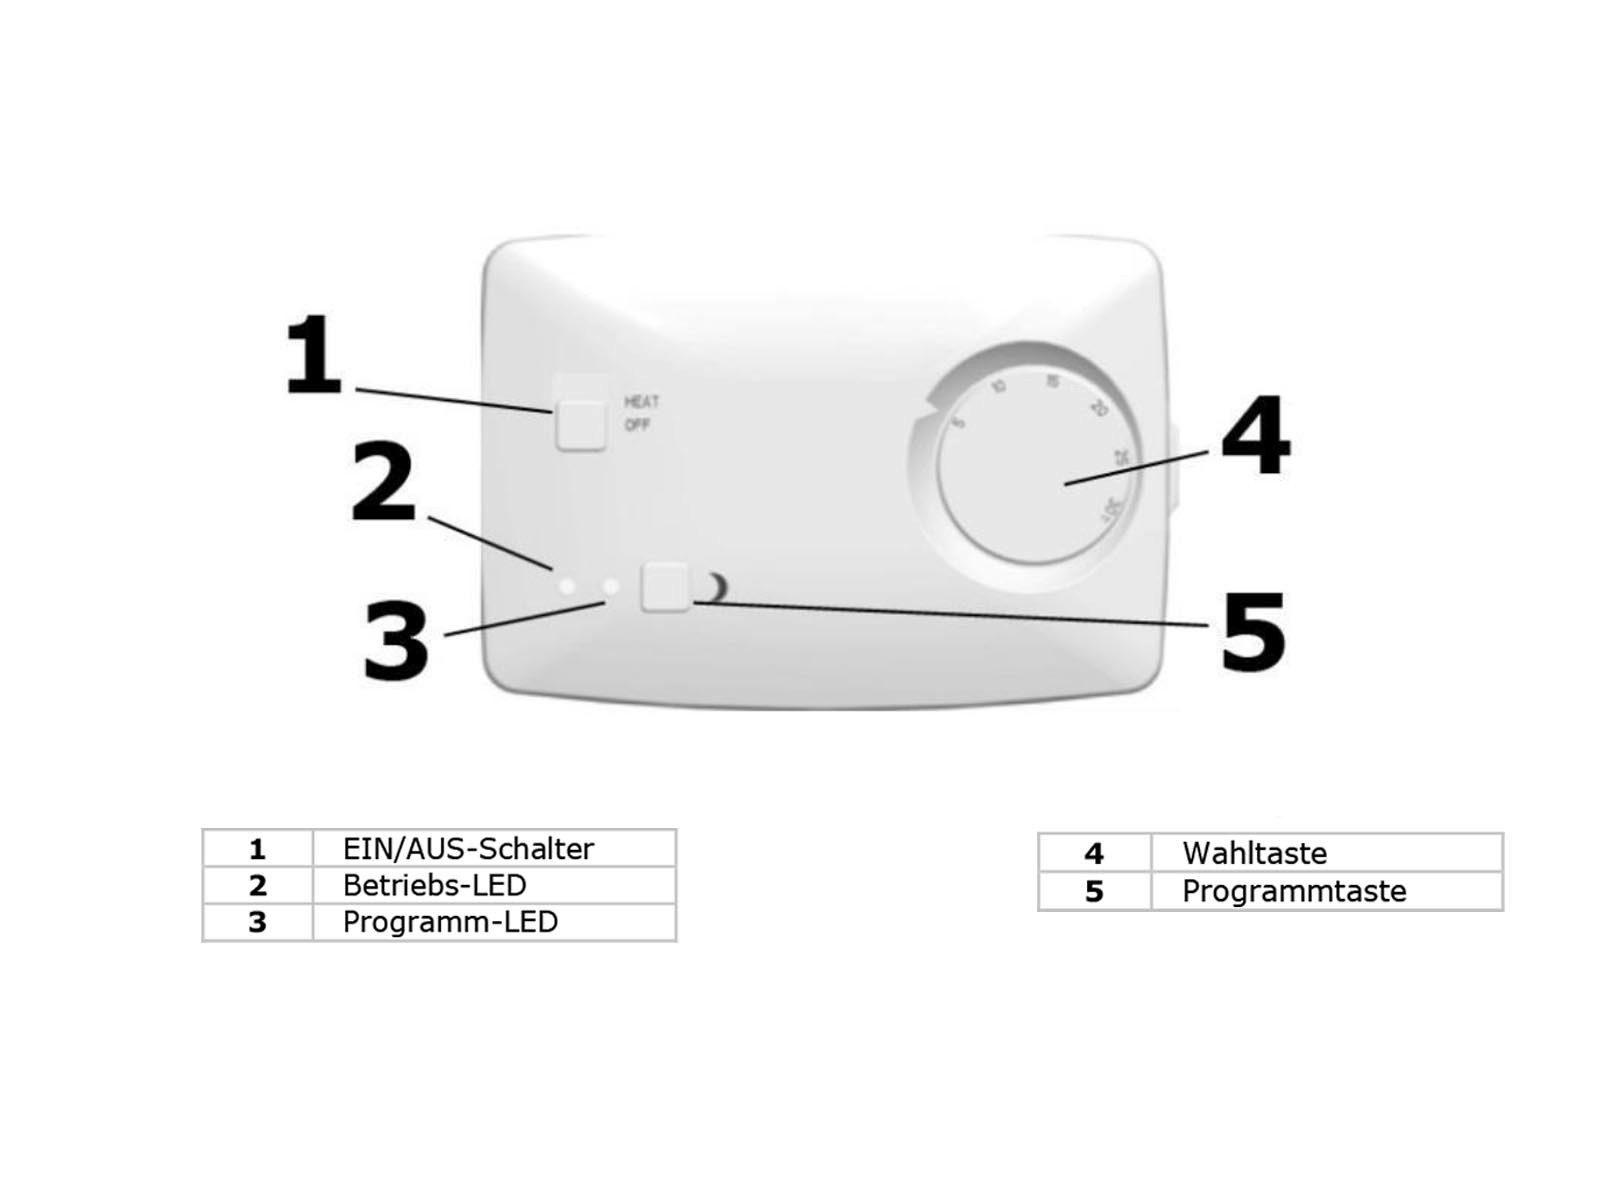 PEREL Heizungsregler max. V, Wand-Thermostat Raumthermostat, elektrisch, Termostat Temperatruregler für analoger 230